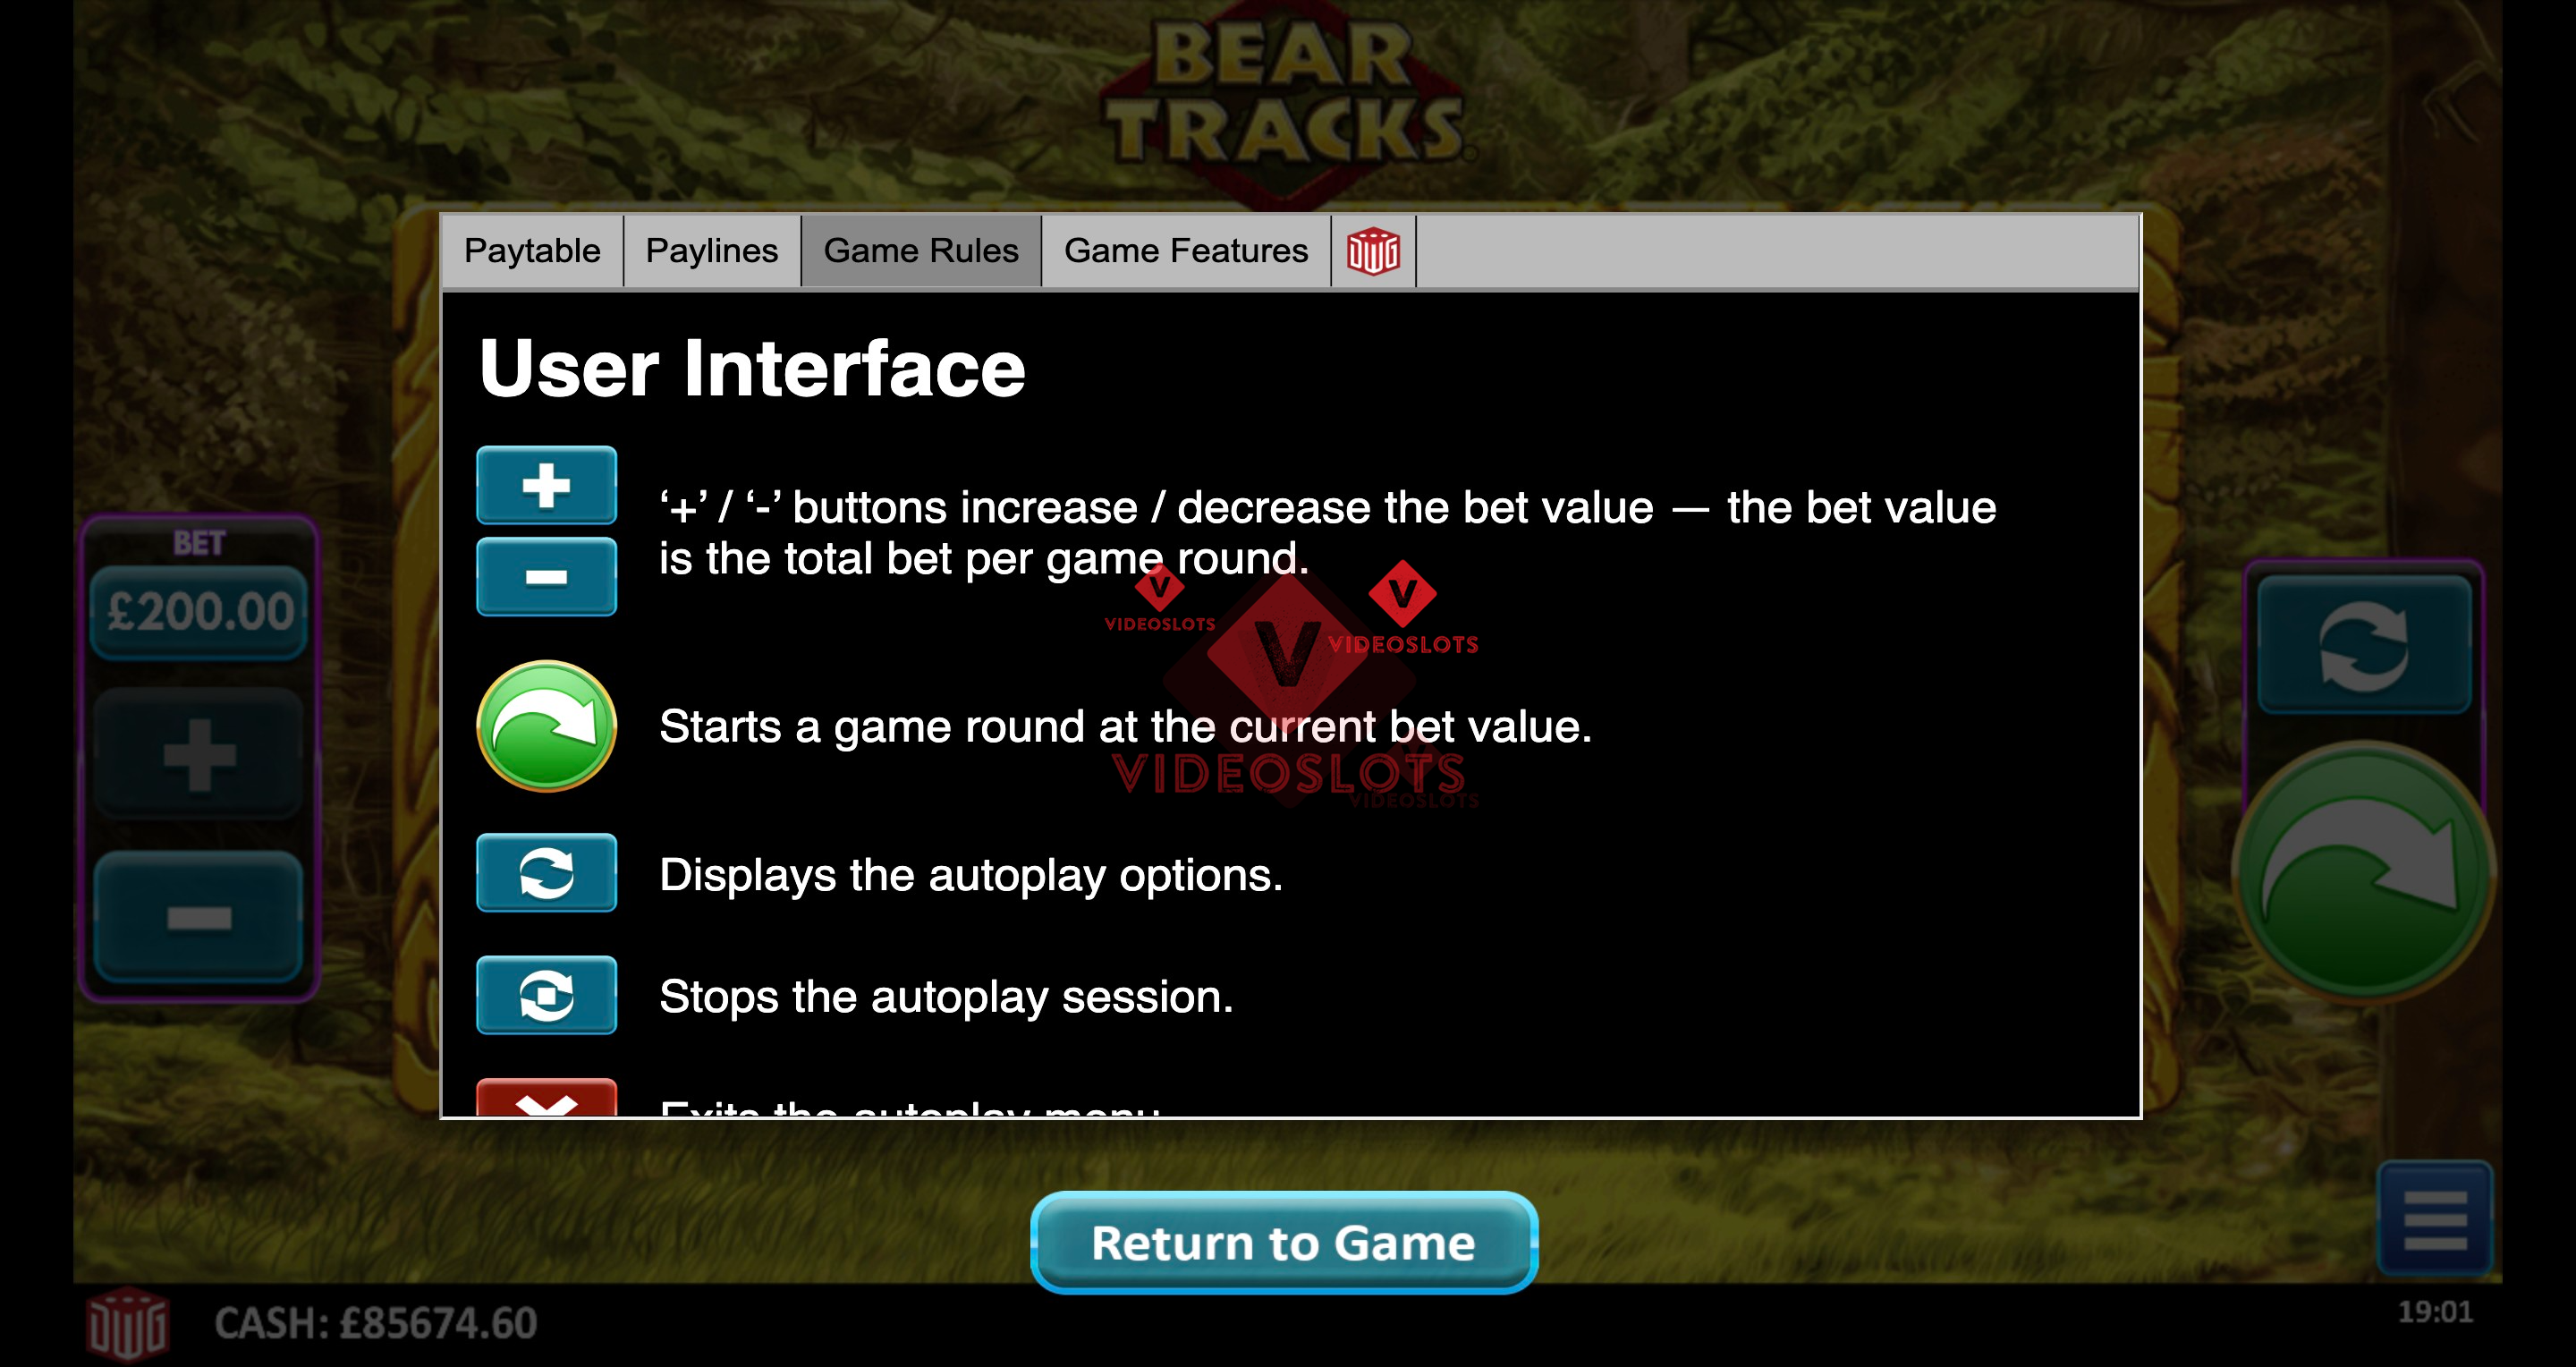 Game Rules for Bear Tracks slot from Greentube